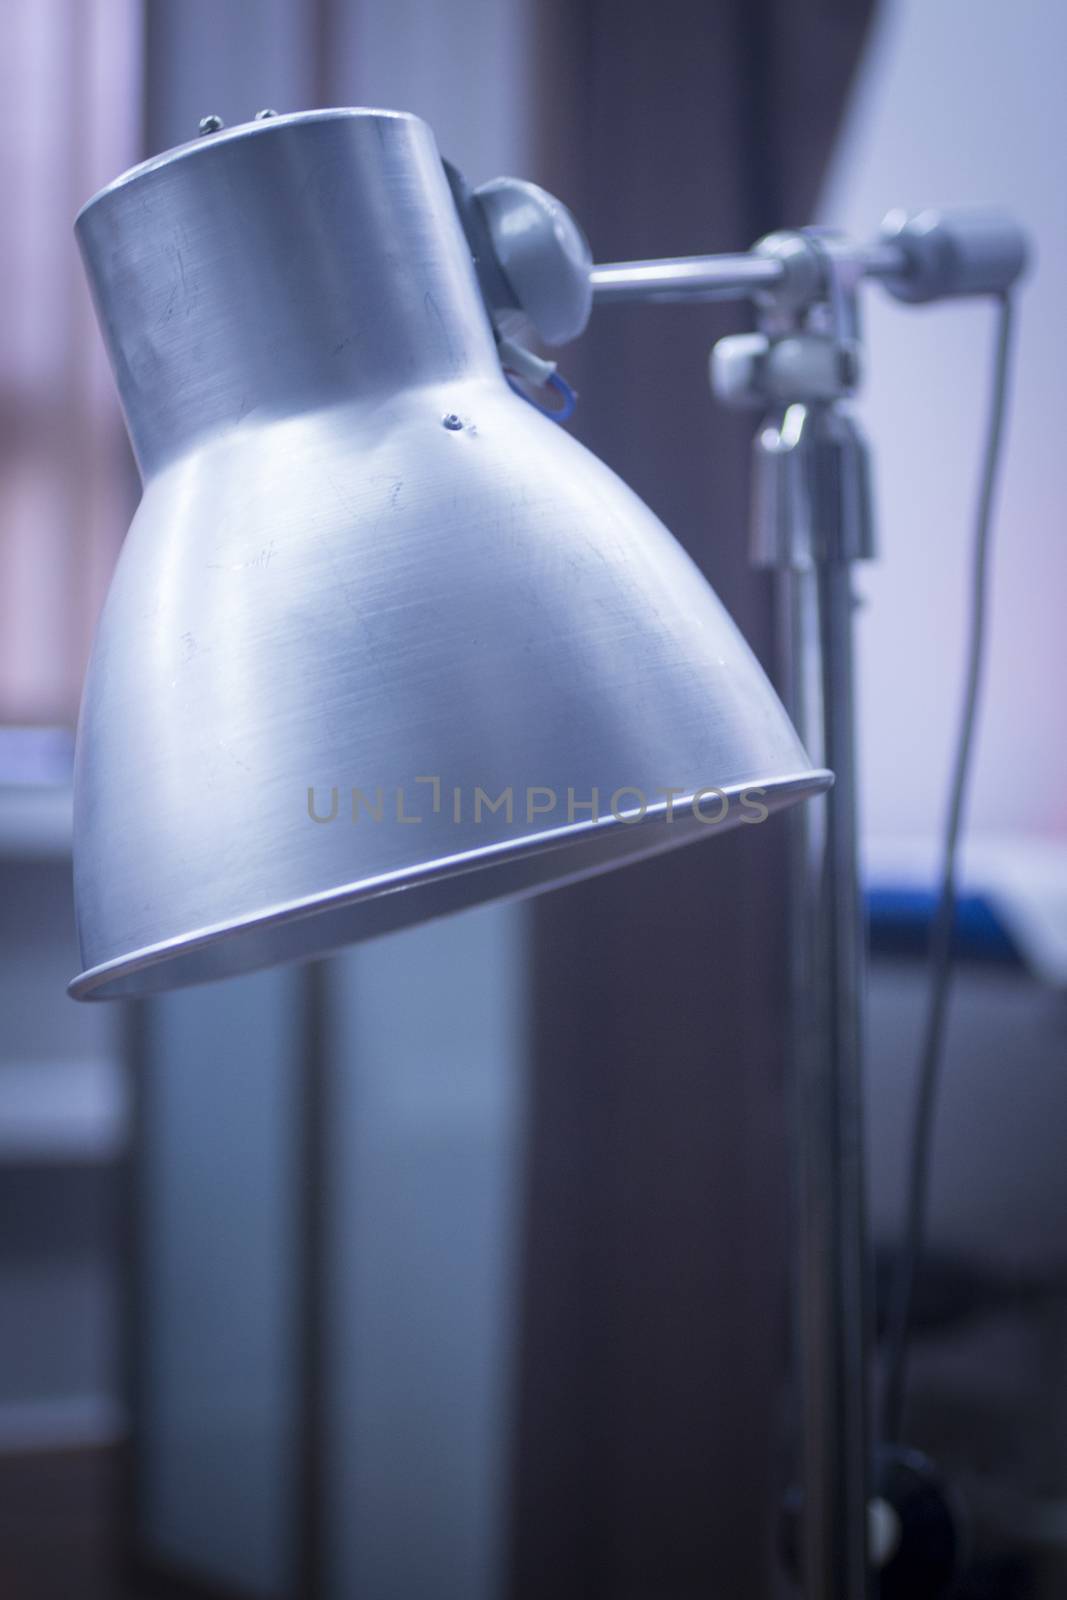 Physiotherapy medical rehabilitation heat lamp by edwardolive